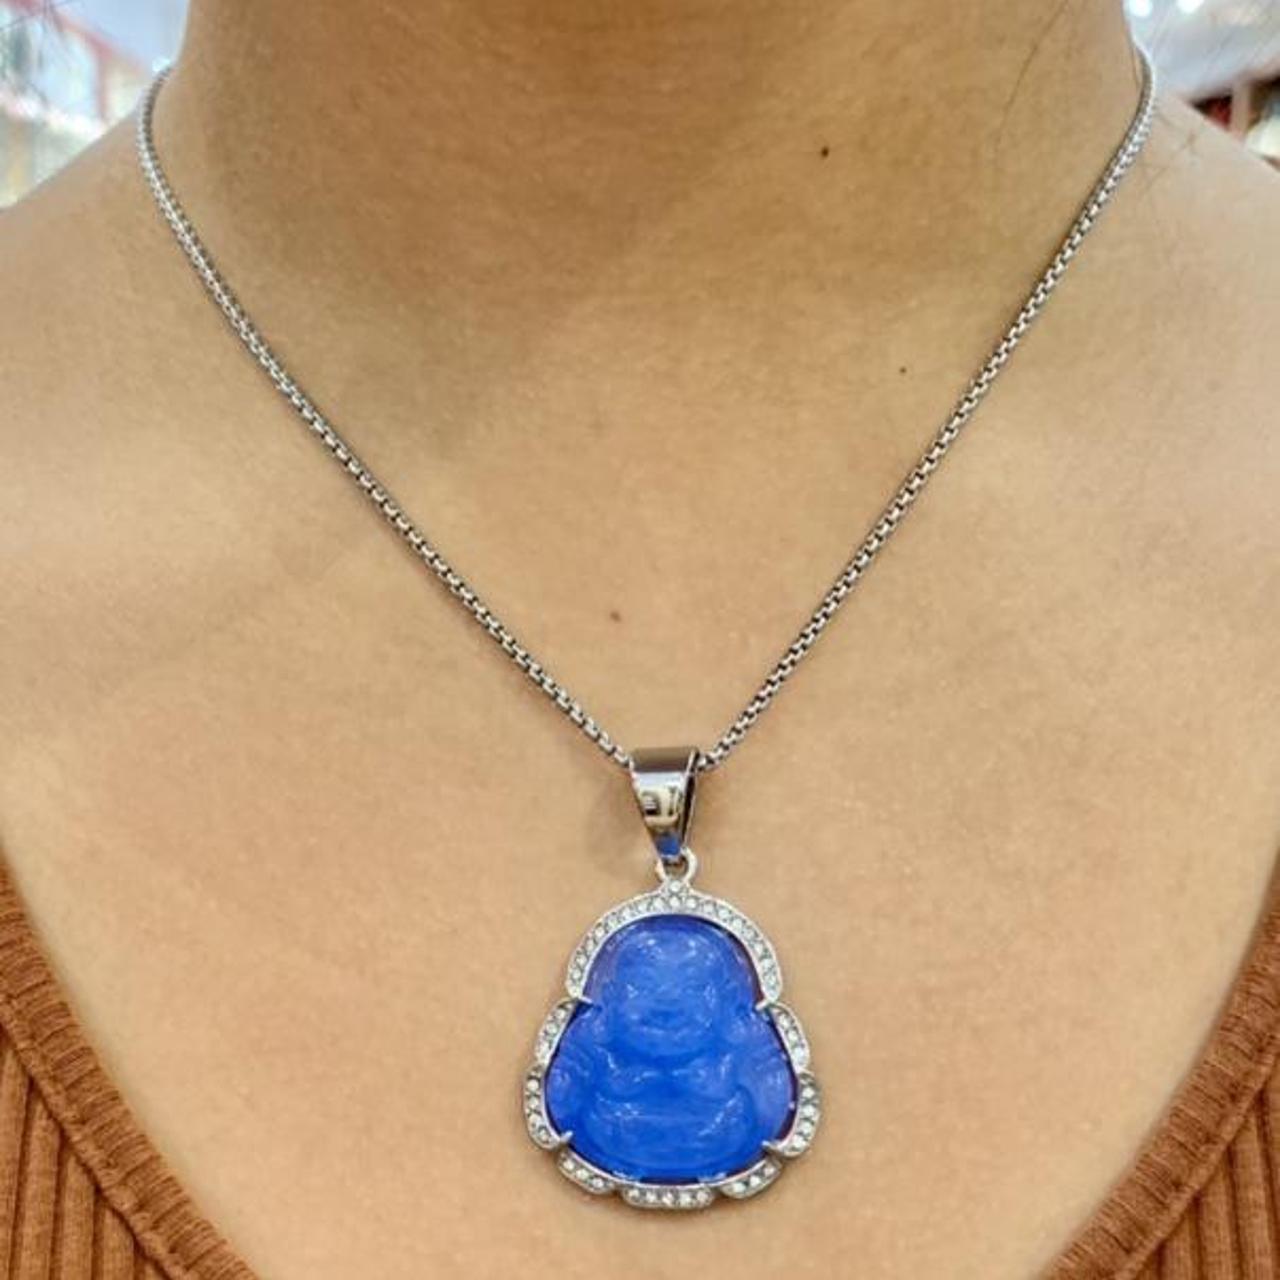 Product Image 1 - Blue Buddha Necklace 

Stainless Steel
Tarnish